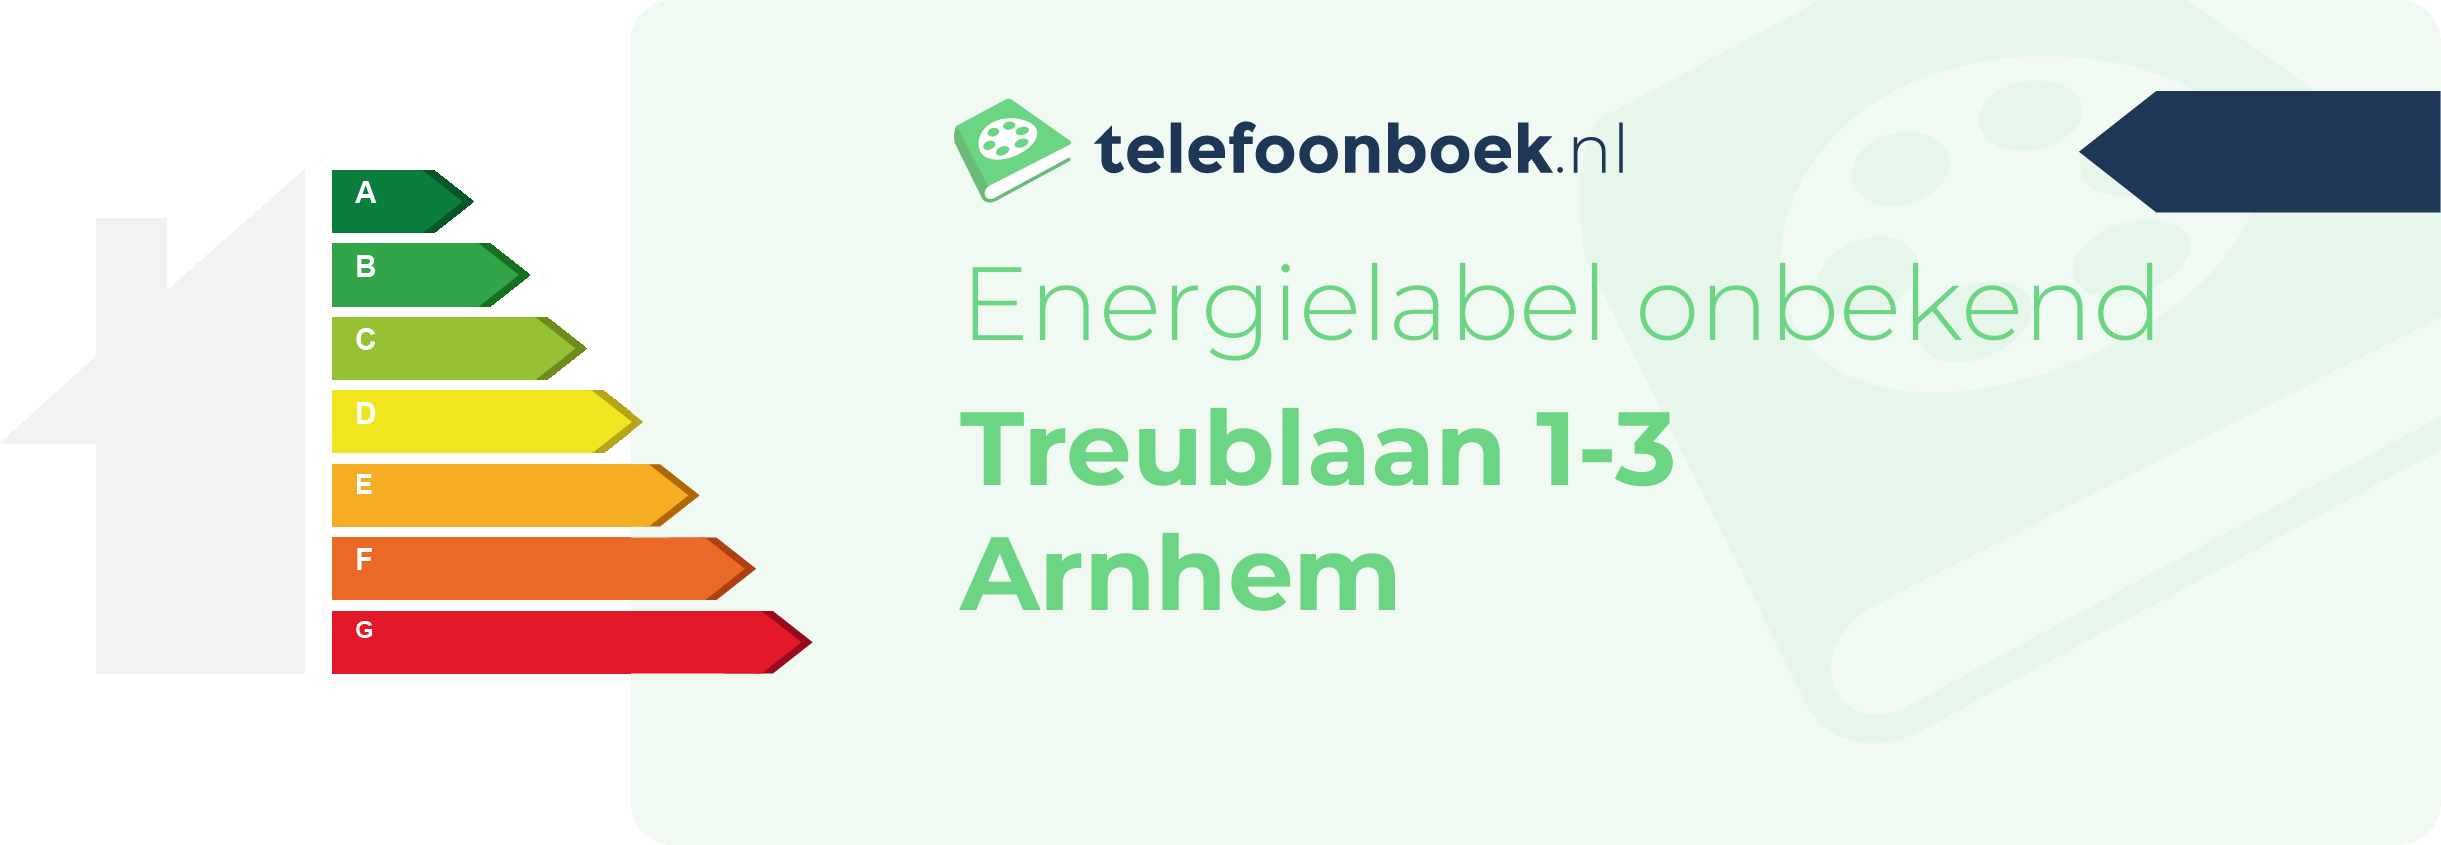 Energielabel Treublaan 1-3 Arnhem